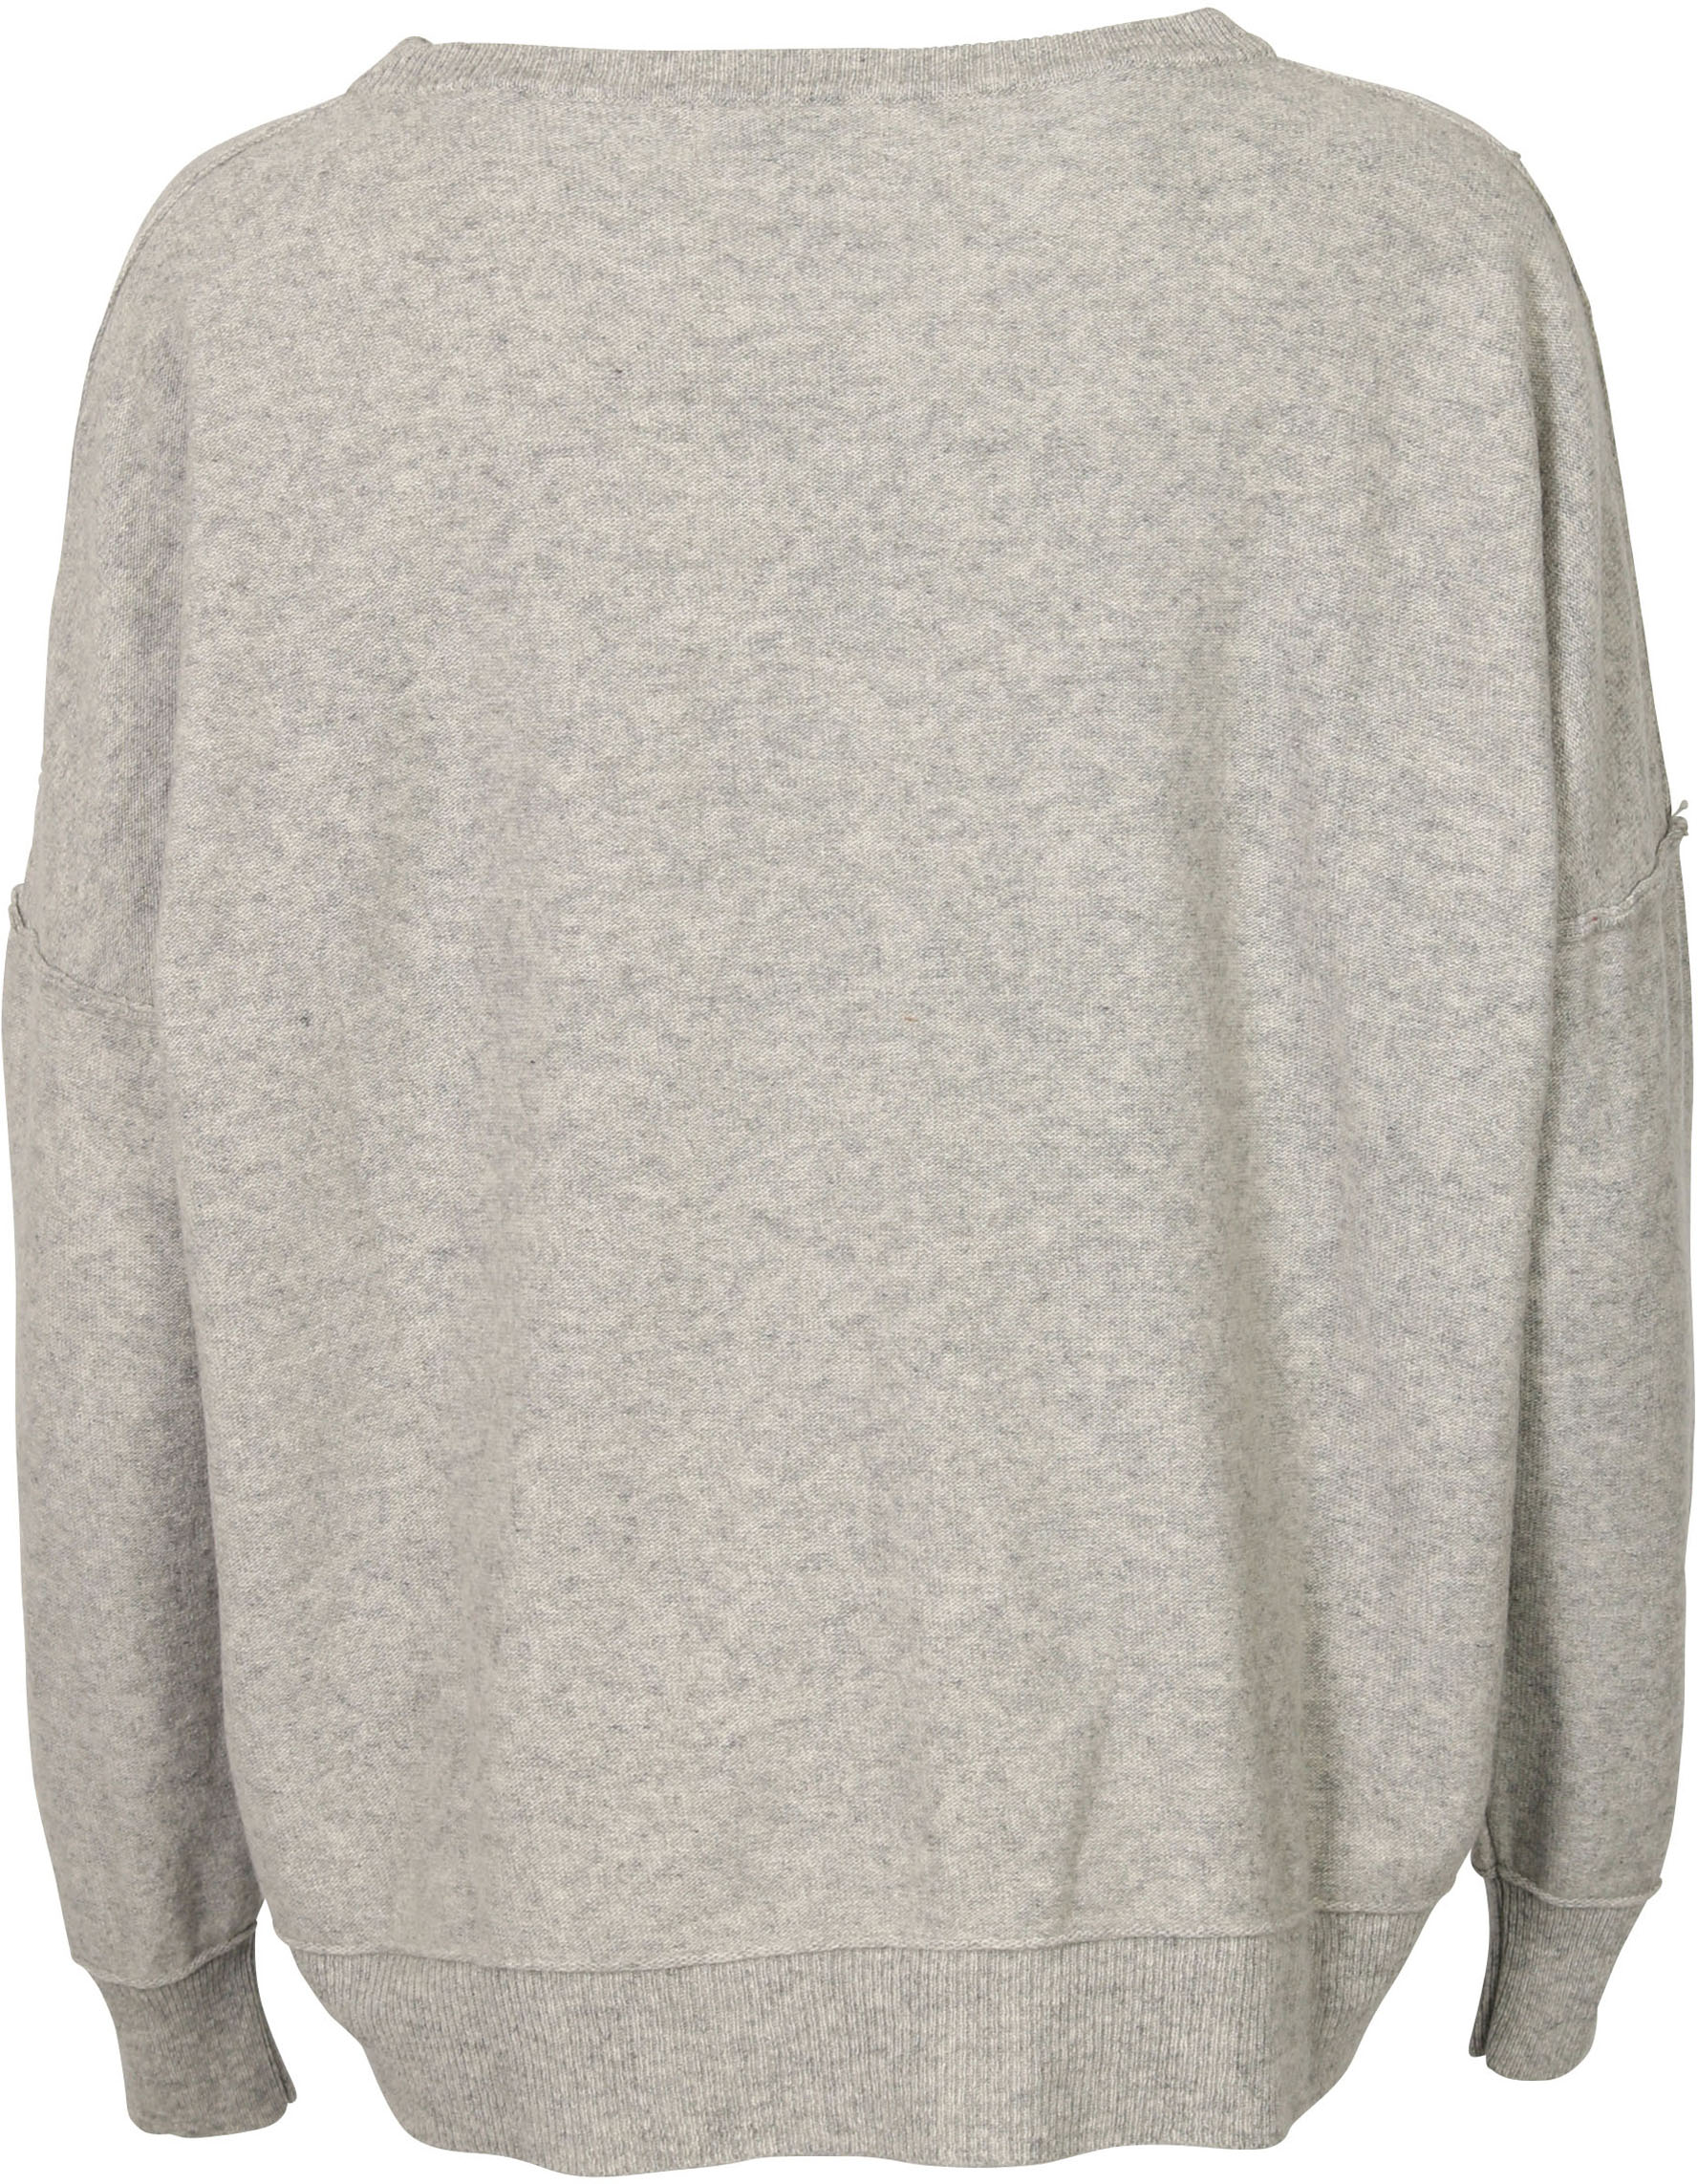 Tif Tiffy Knit Sweater Light Grey S/M